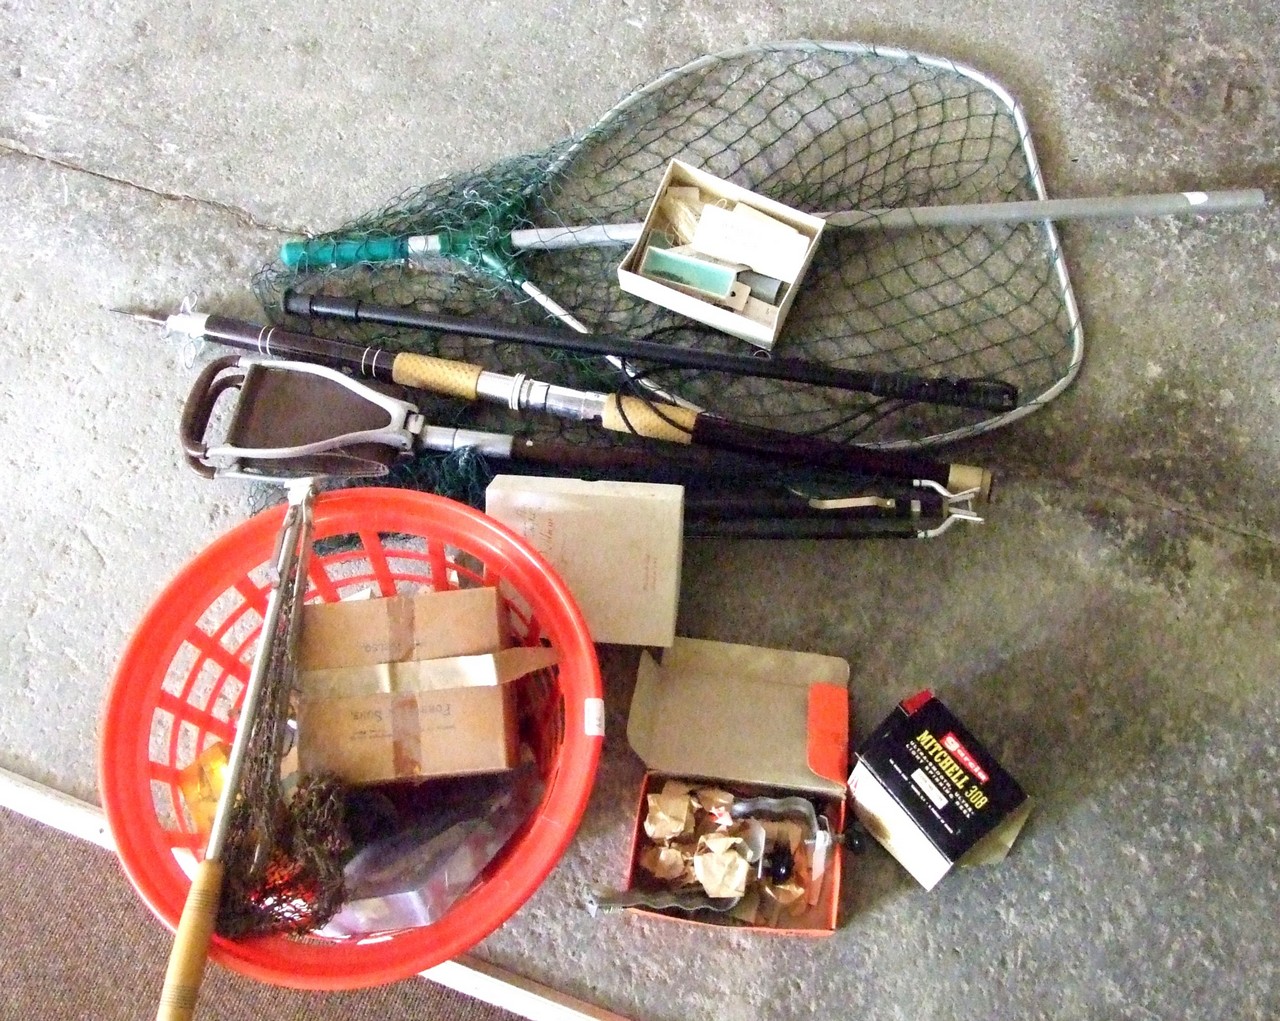 Assorted Fishing Gear incl. Rod, Landing Nets, Flies, Wading Stick etc. Also Shooting Stick. £30/40